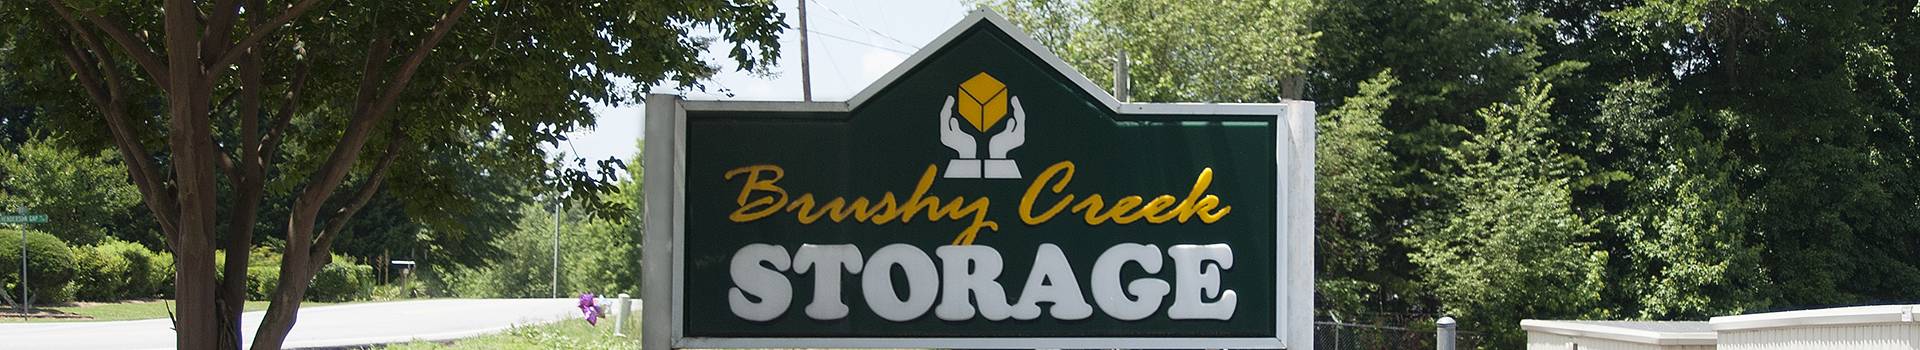 Self Storage, Drive-Up Storage, Climate Controlled, Storage Units, Storage Facility, Brushy Creek Storage, Greer, SC